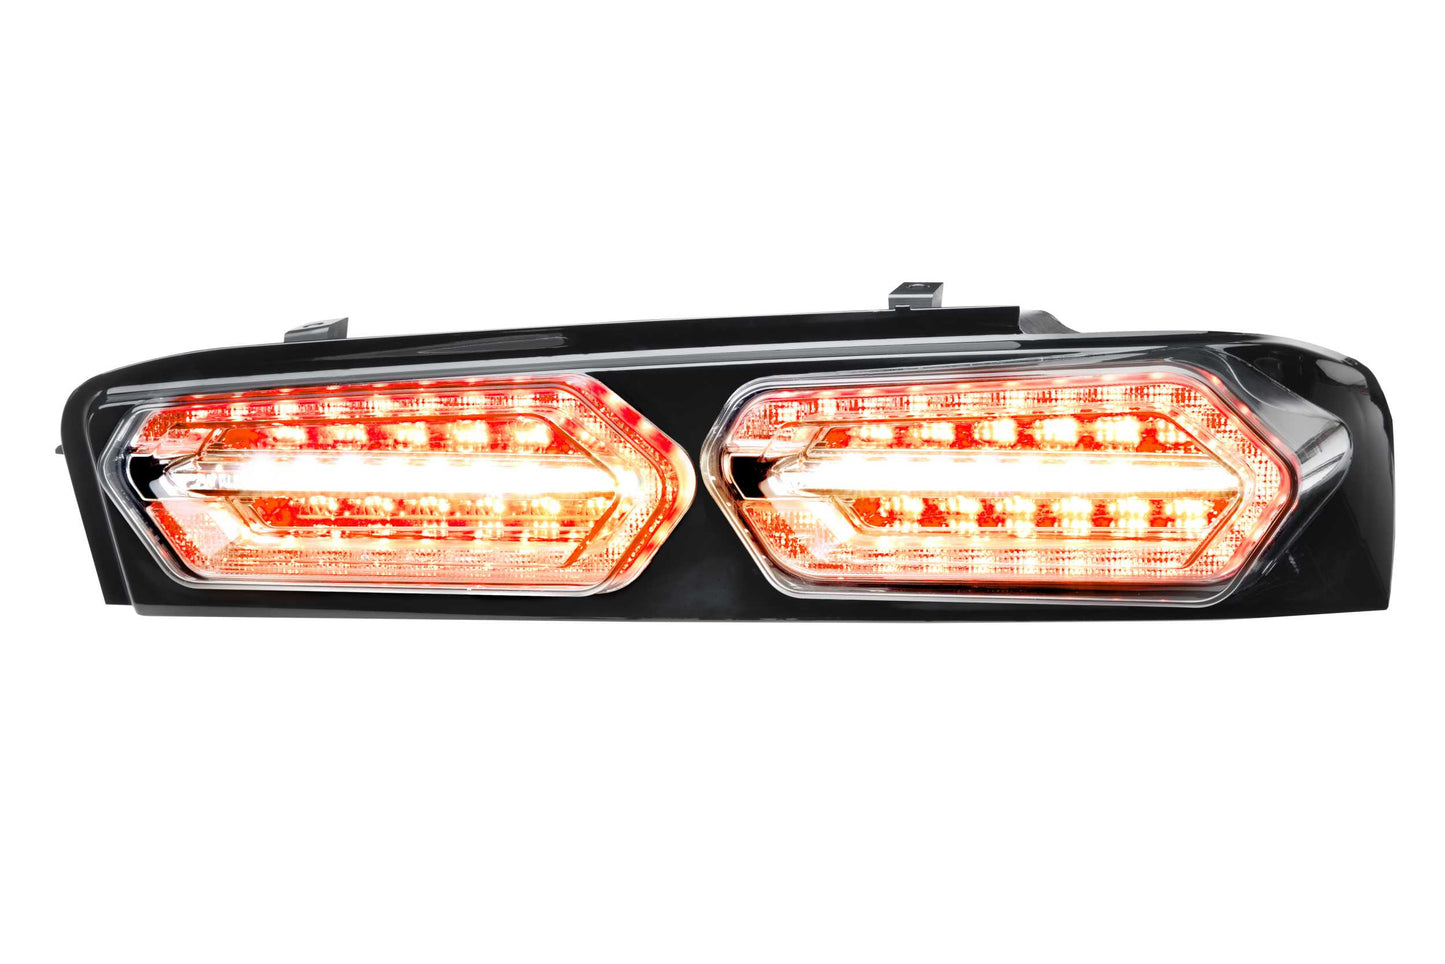 XB LED Tail Lights: Chevrolet Camaro (16-18) (Pair / Facelift / Smoked)